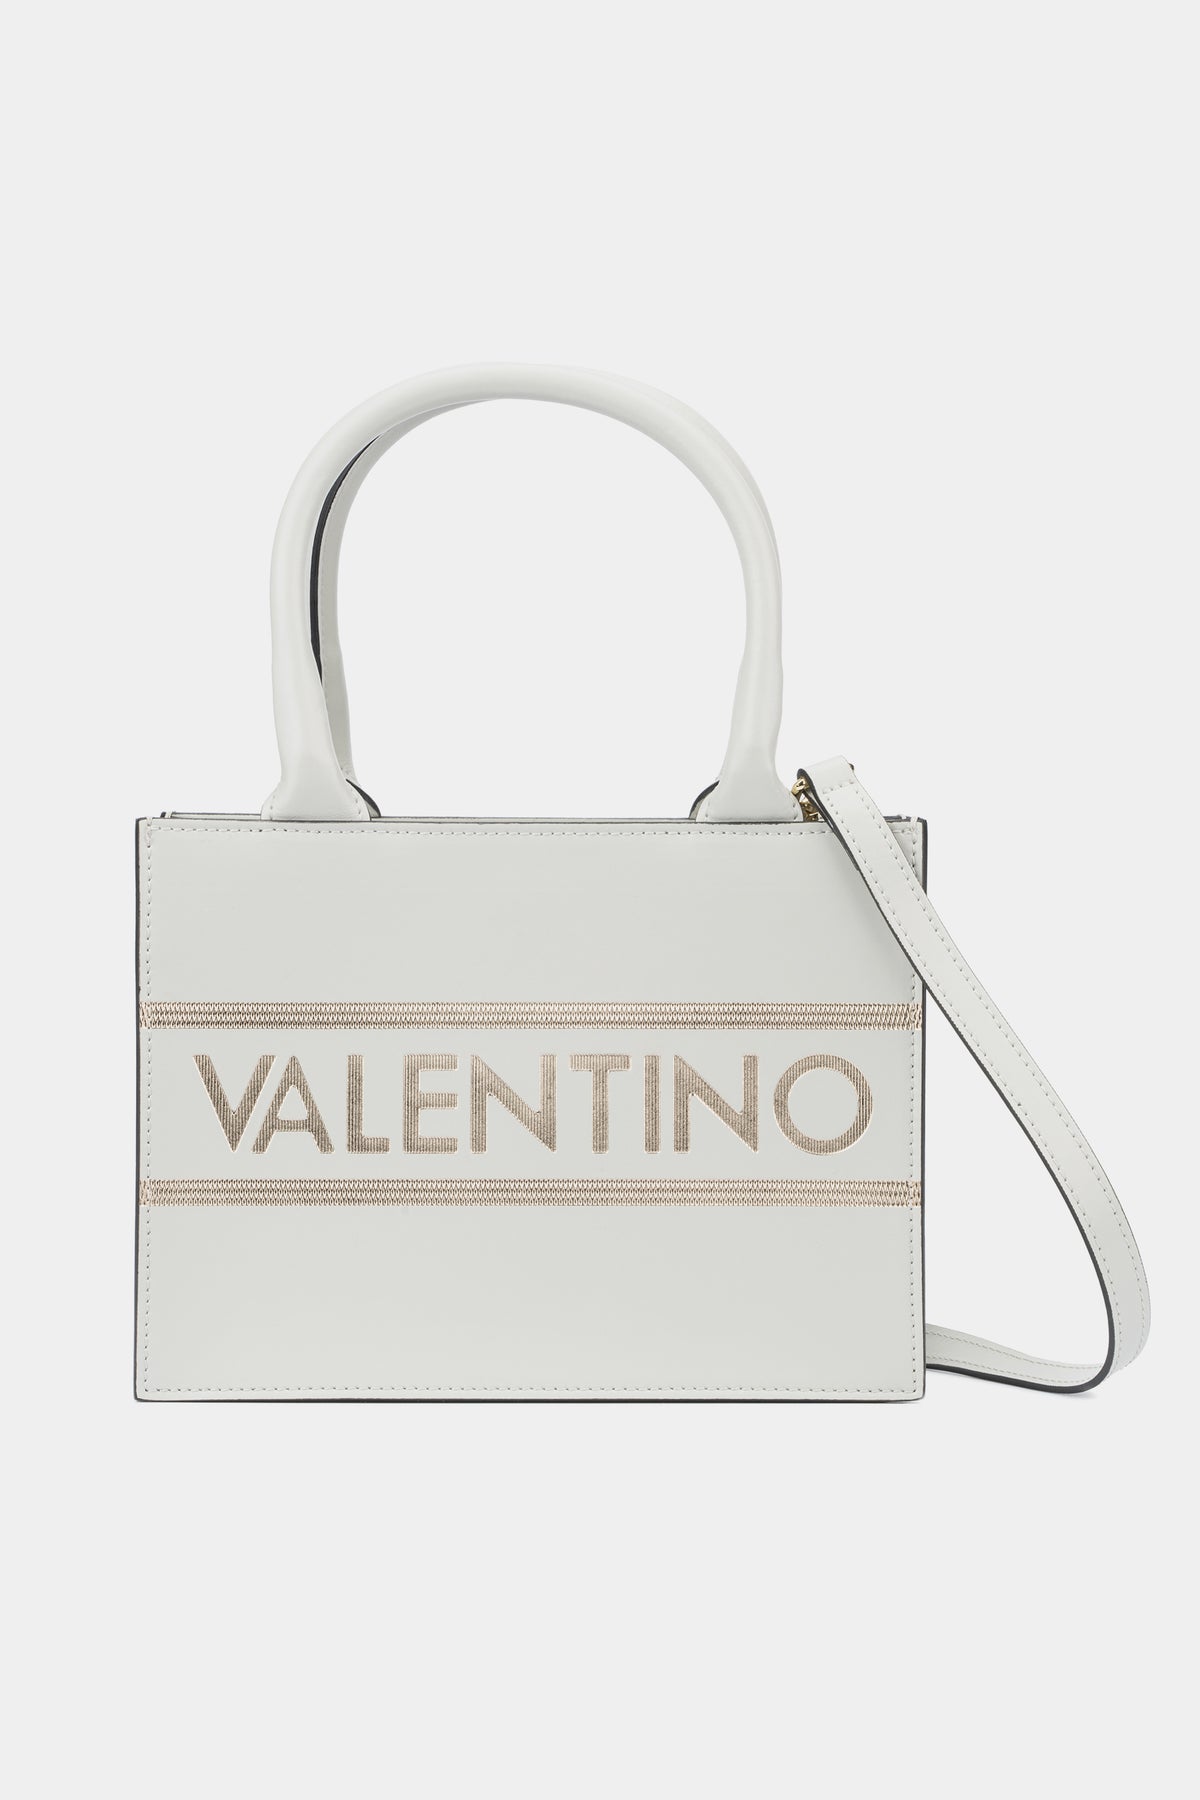 Valentino by Mario Valentino Marie Lavoro Leather Satchel